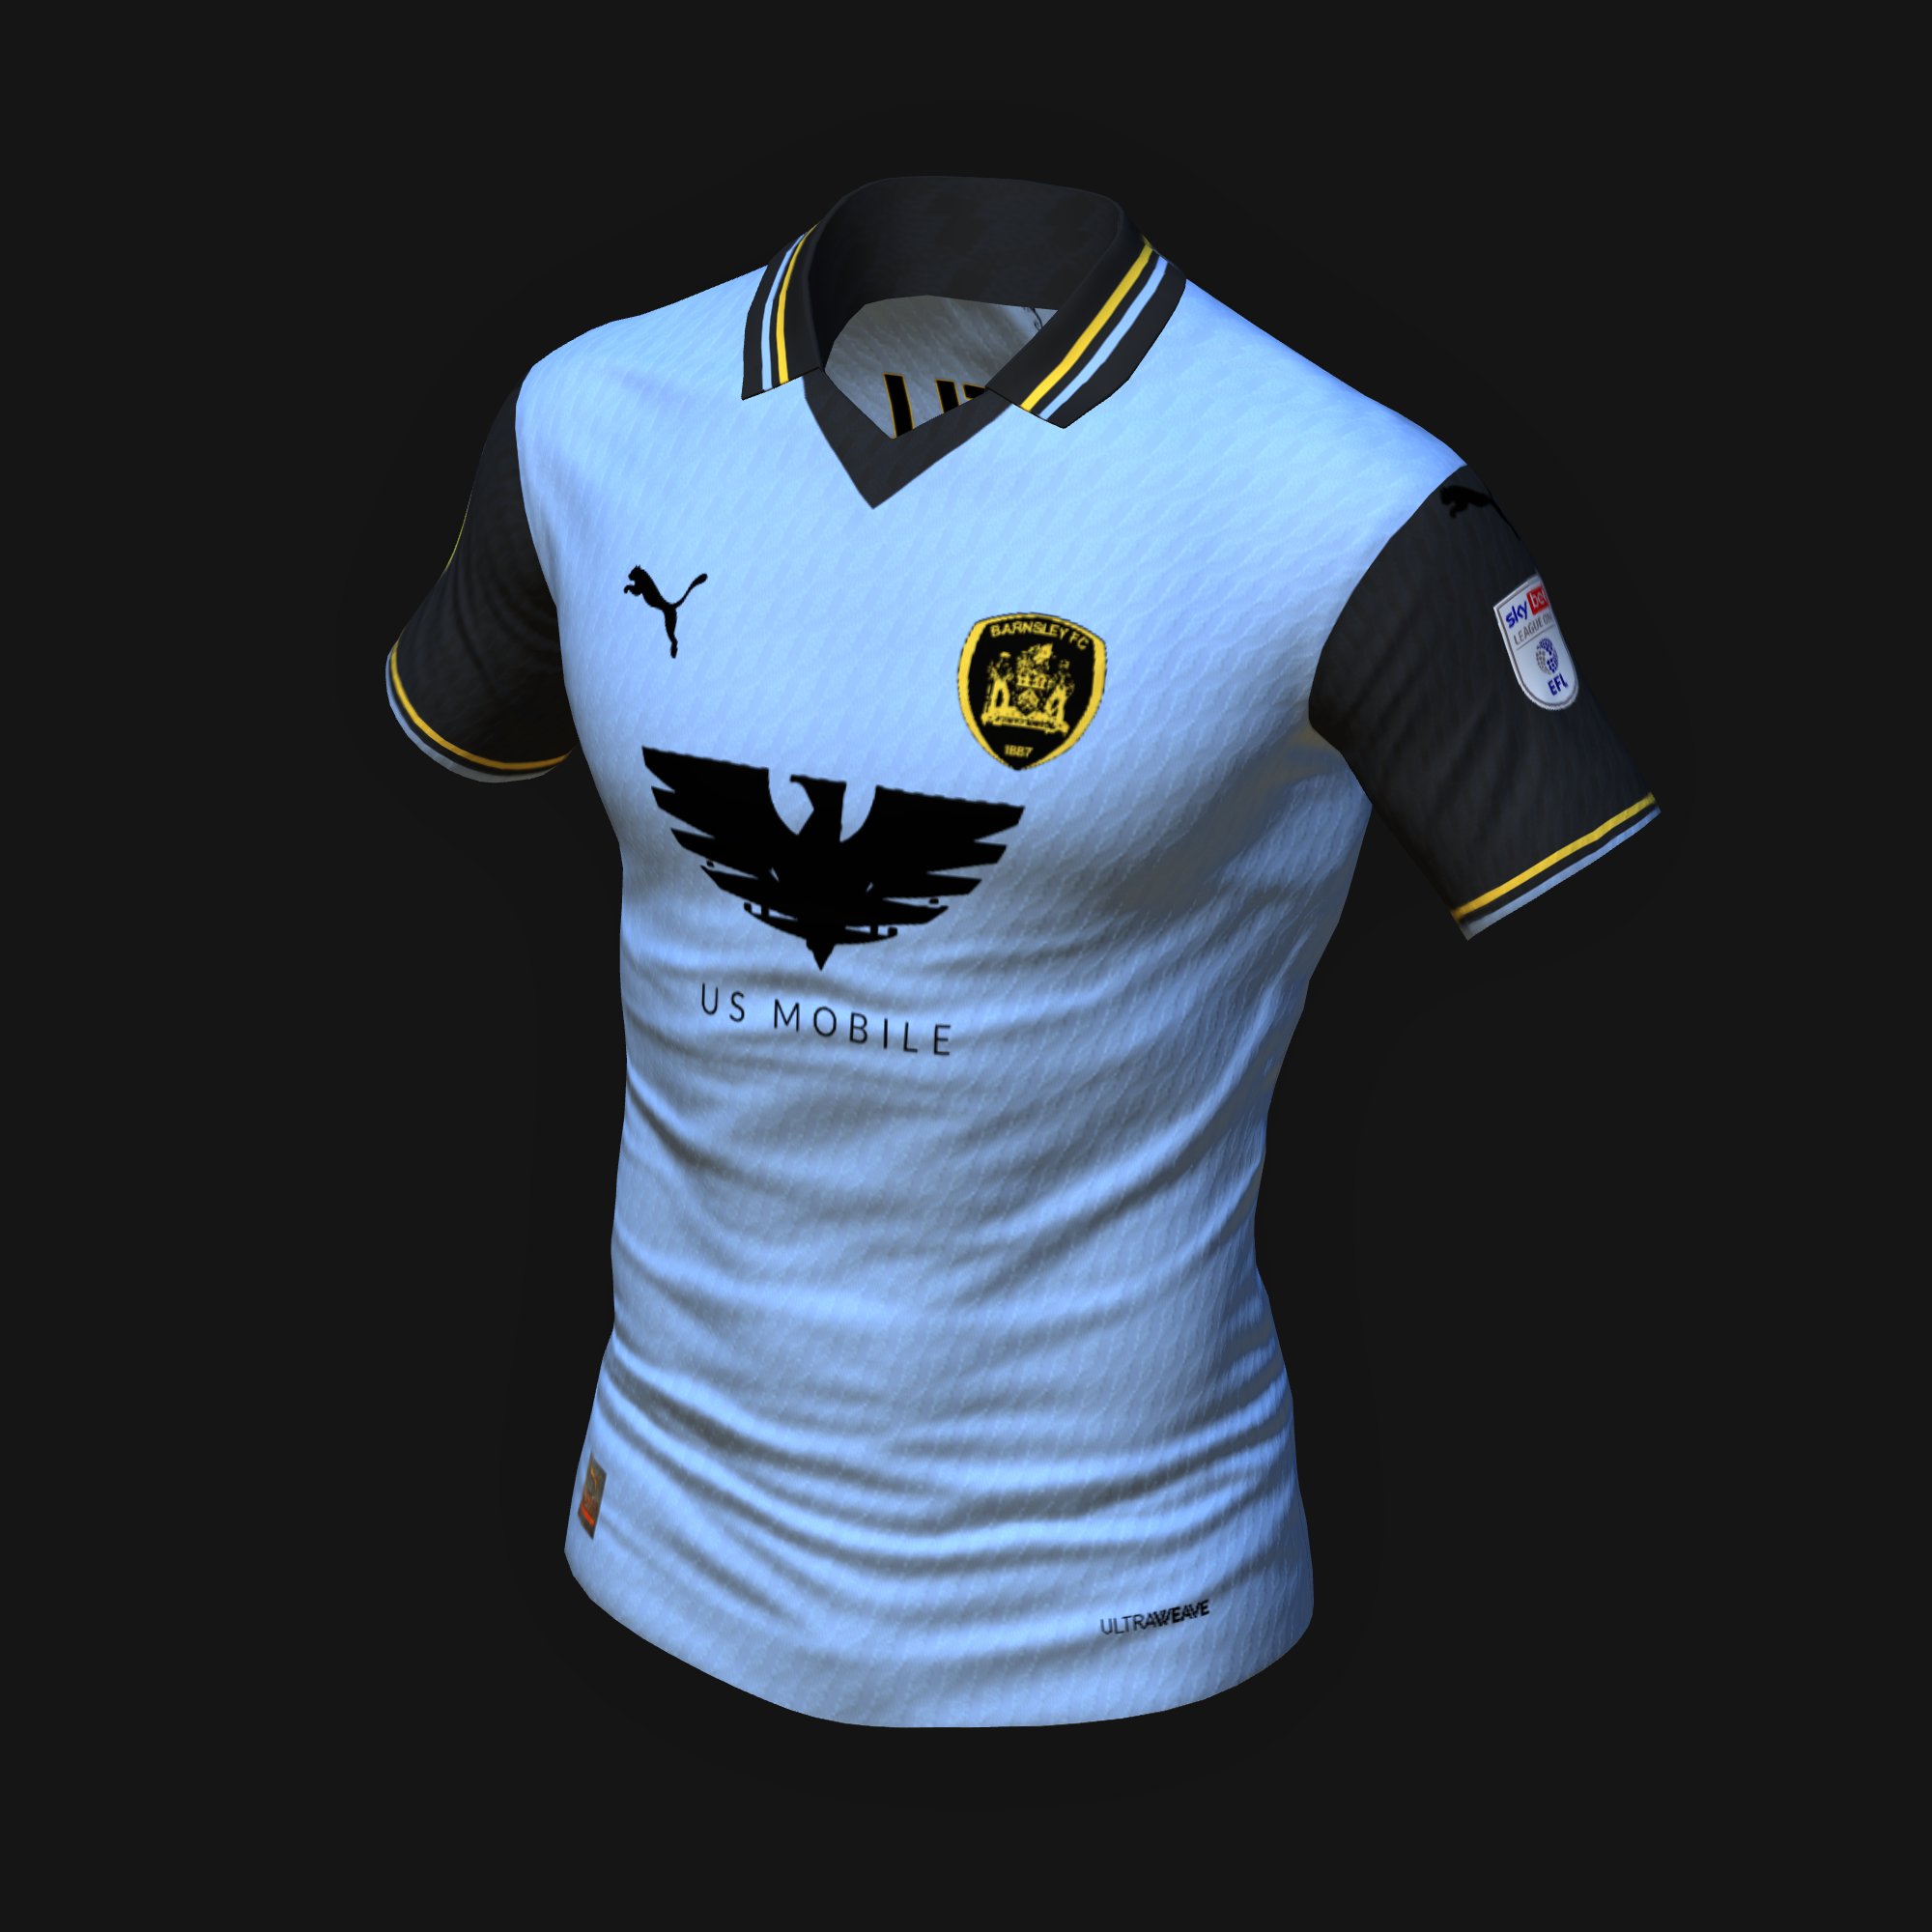 Swansea 23/24 concept home shirt - FIFA Kit Creator Showcase